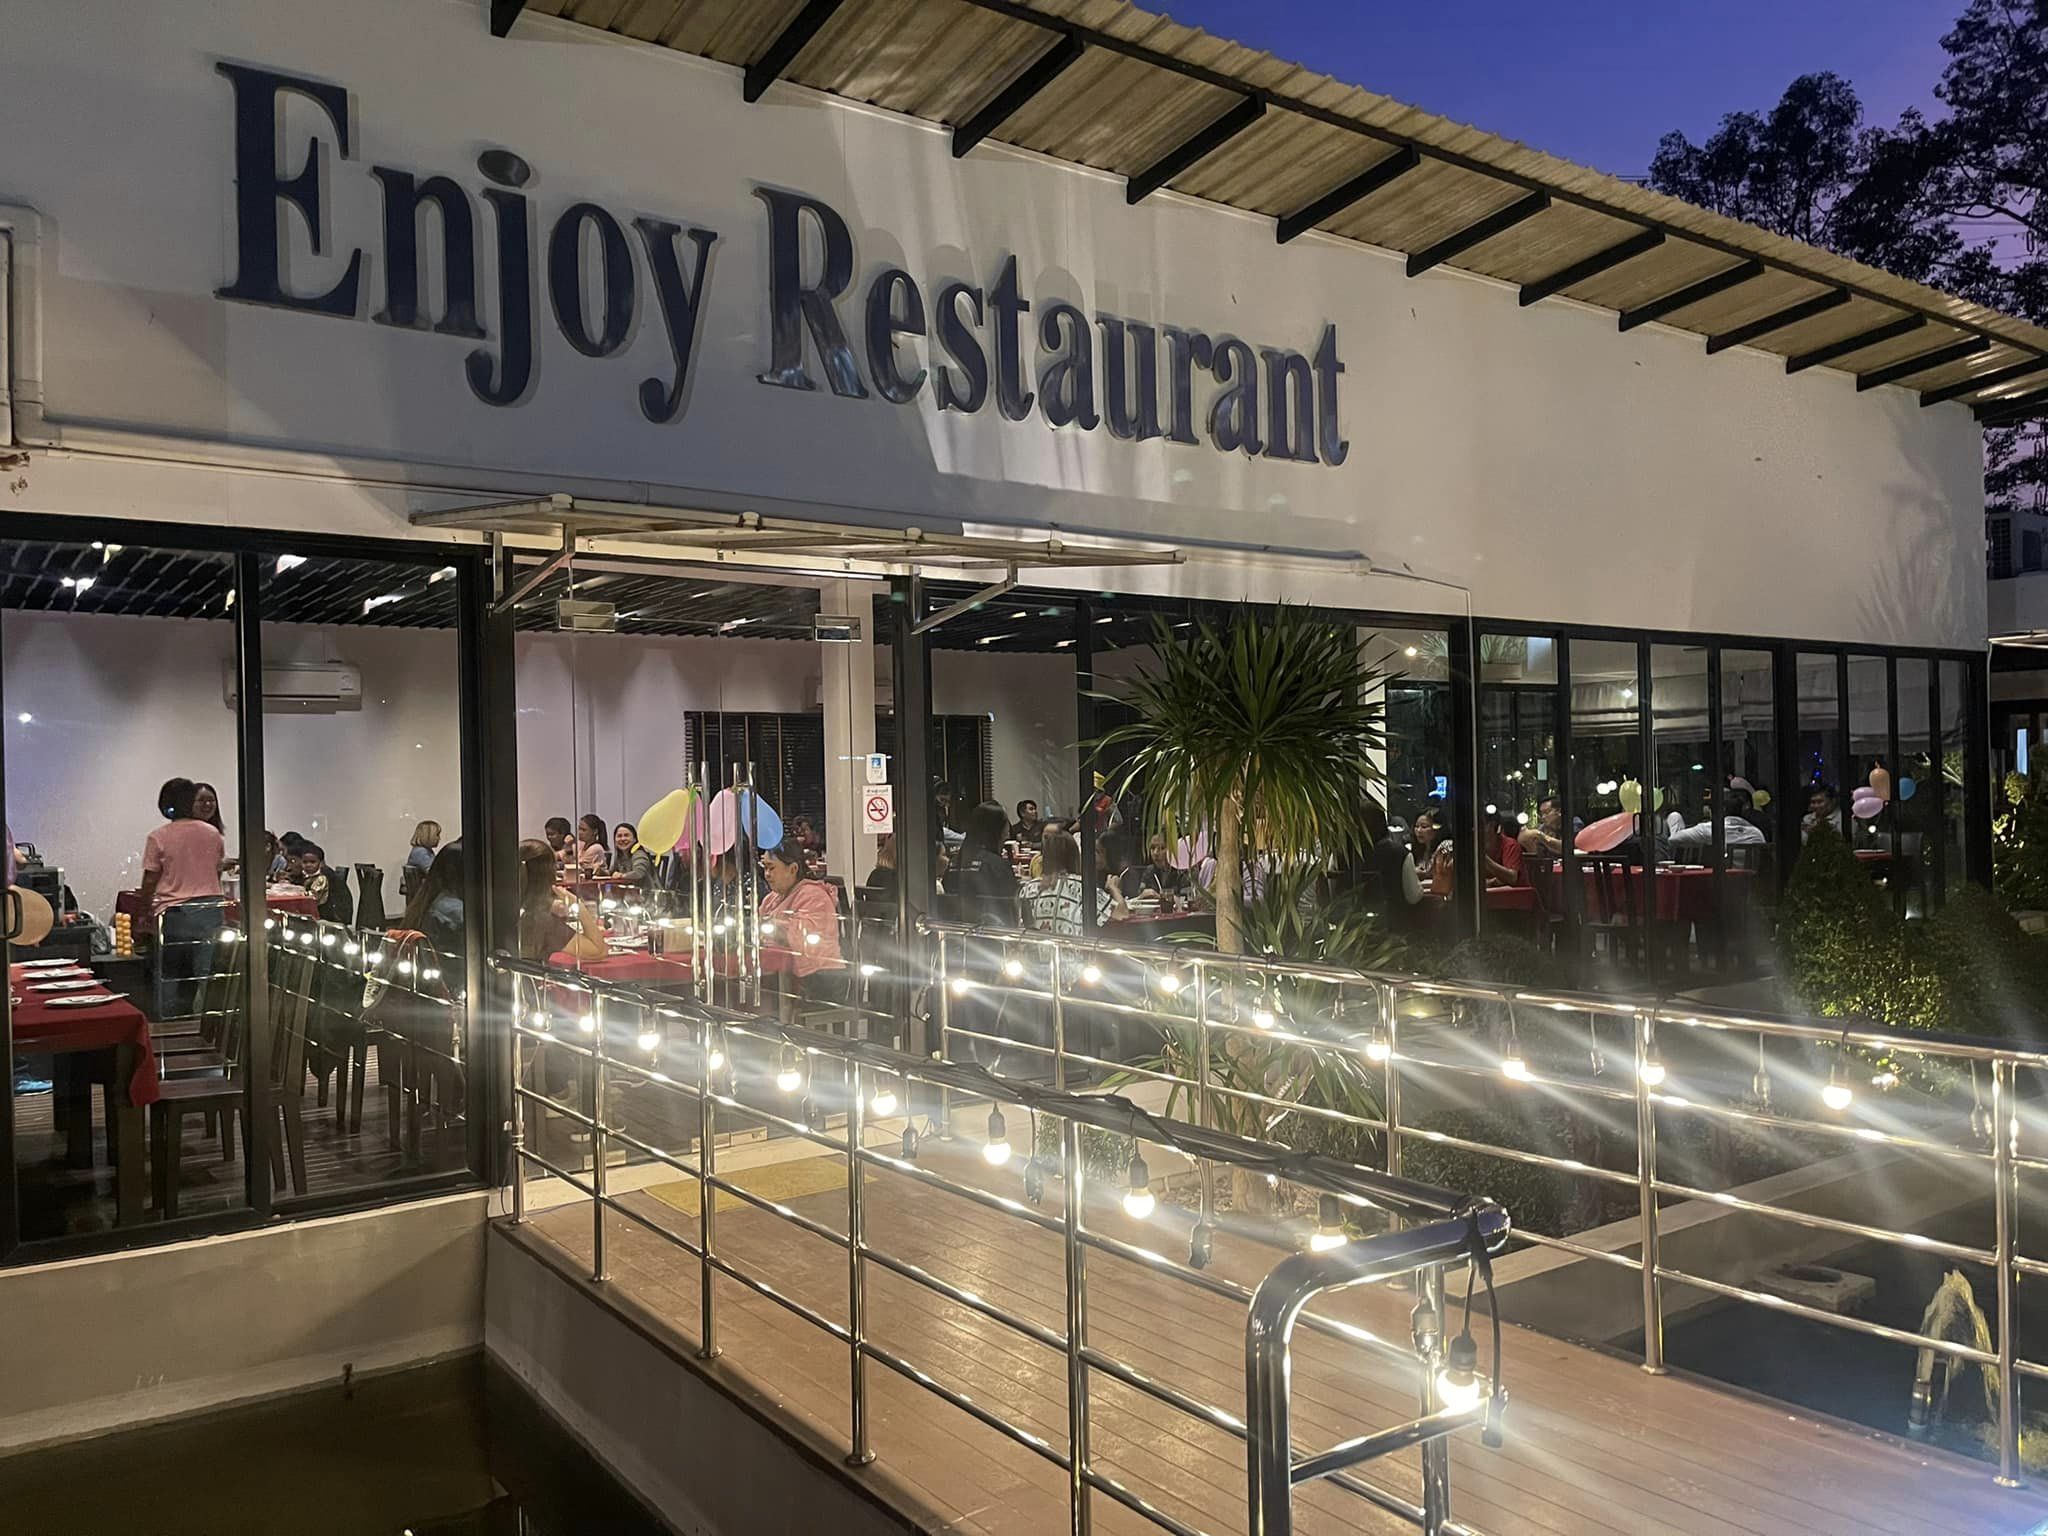 Enjoy Restaurant Roi-Et (Enjoy Restaurant Roi-Et) : Roi Et (ร้อยเอ็ด)